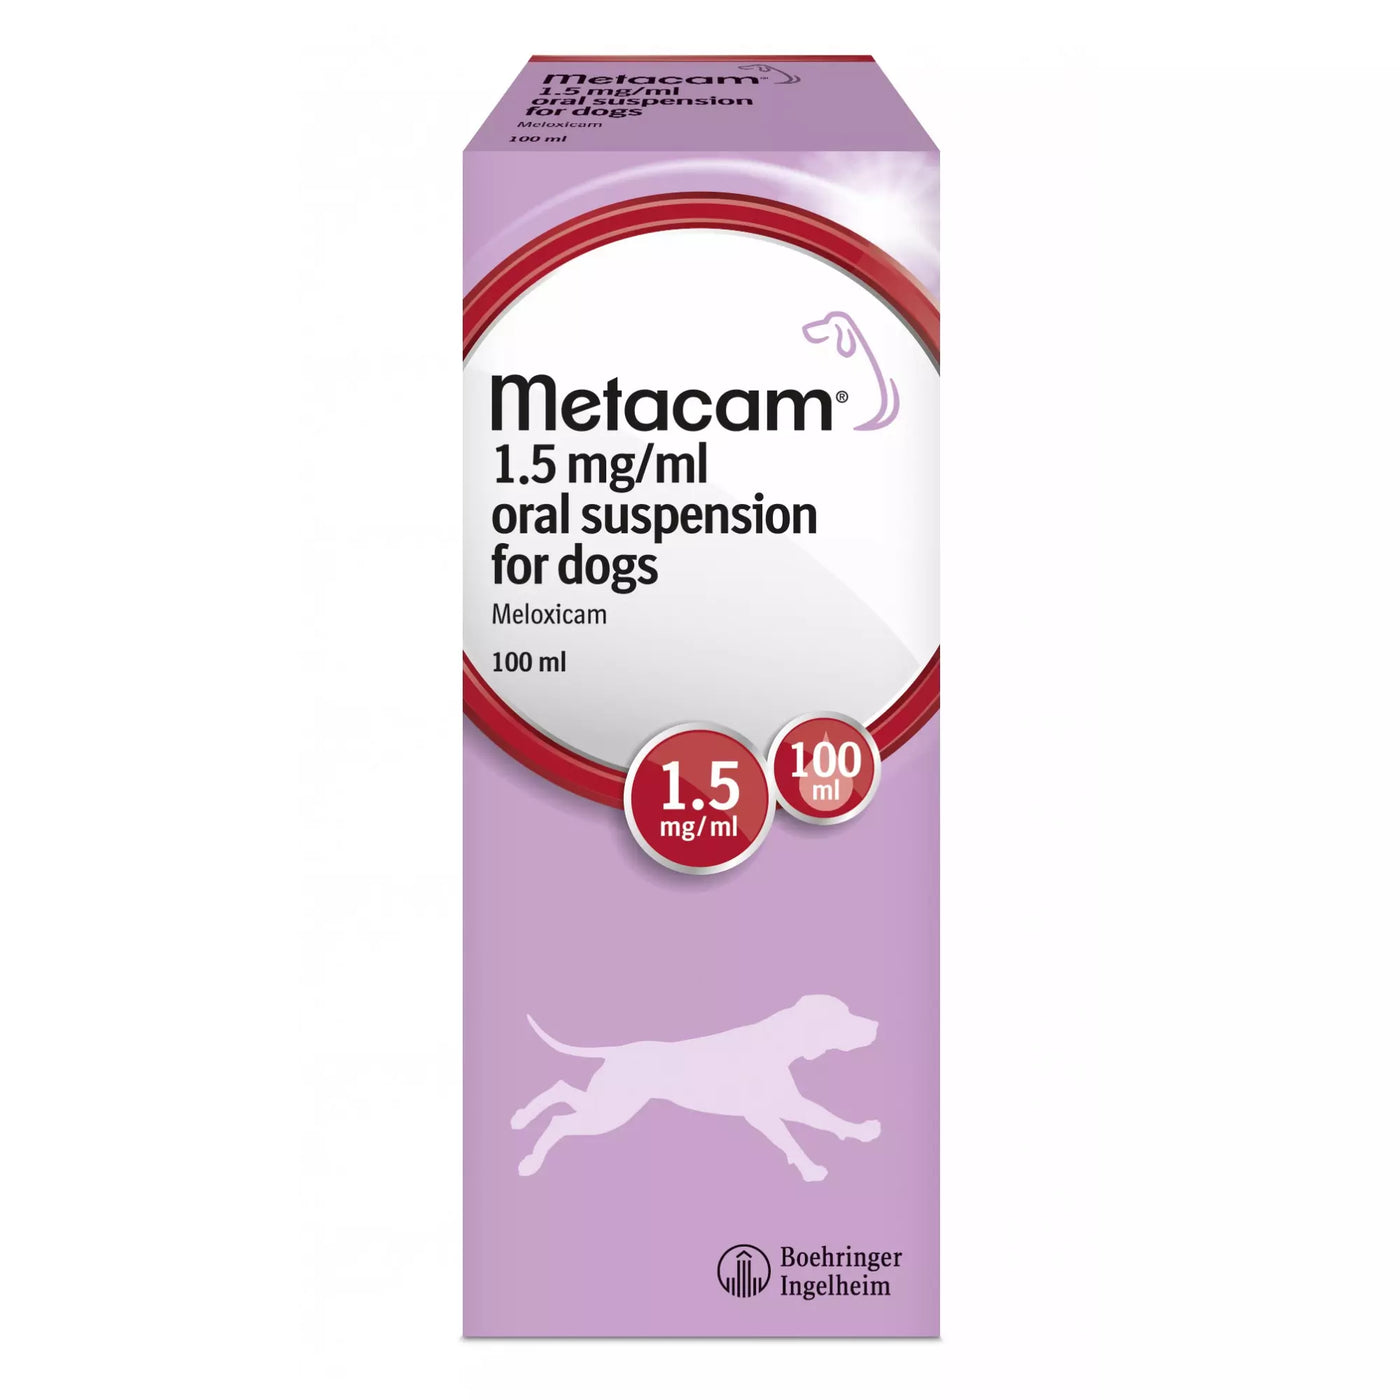 Metacam 1.5mg/ml Oral Suspension for Dogs